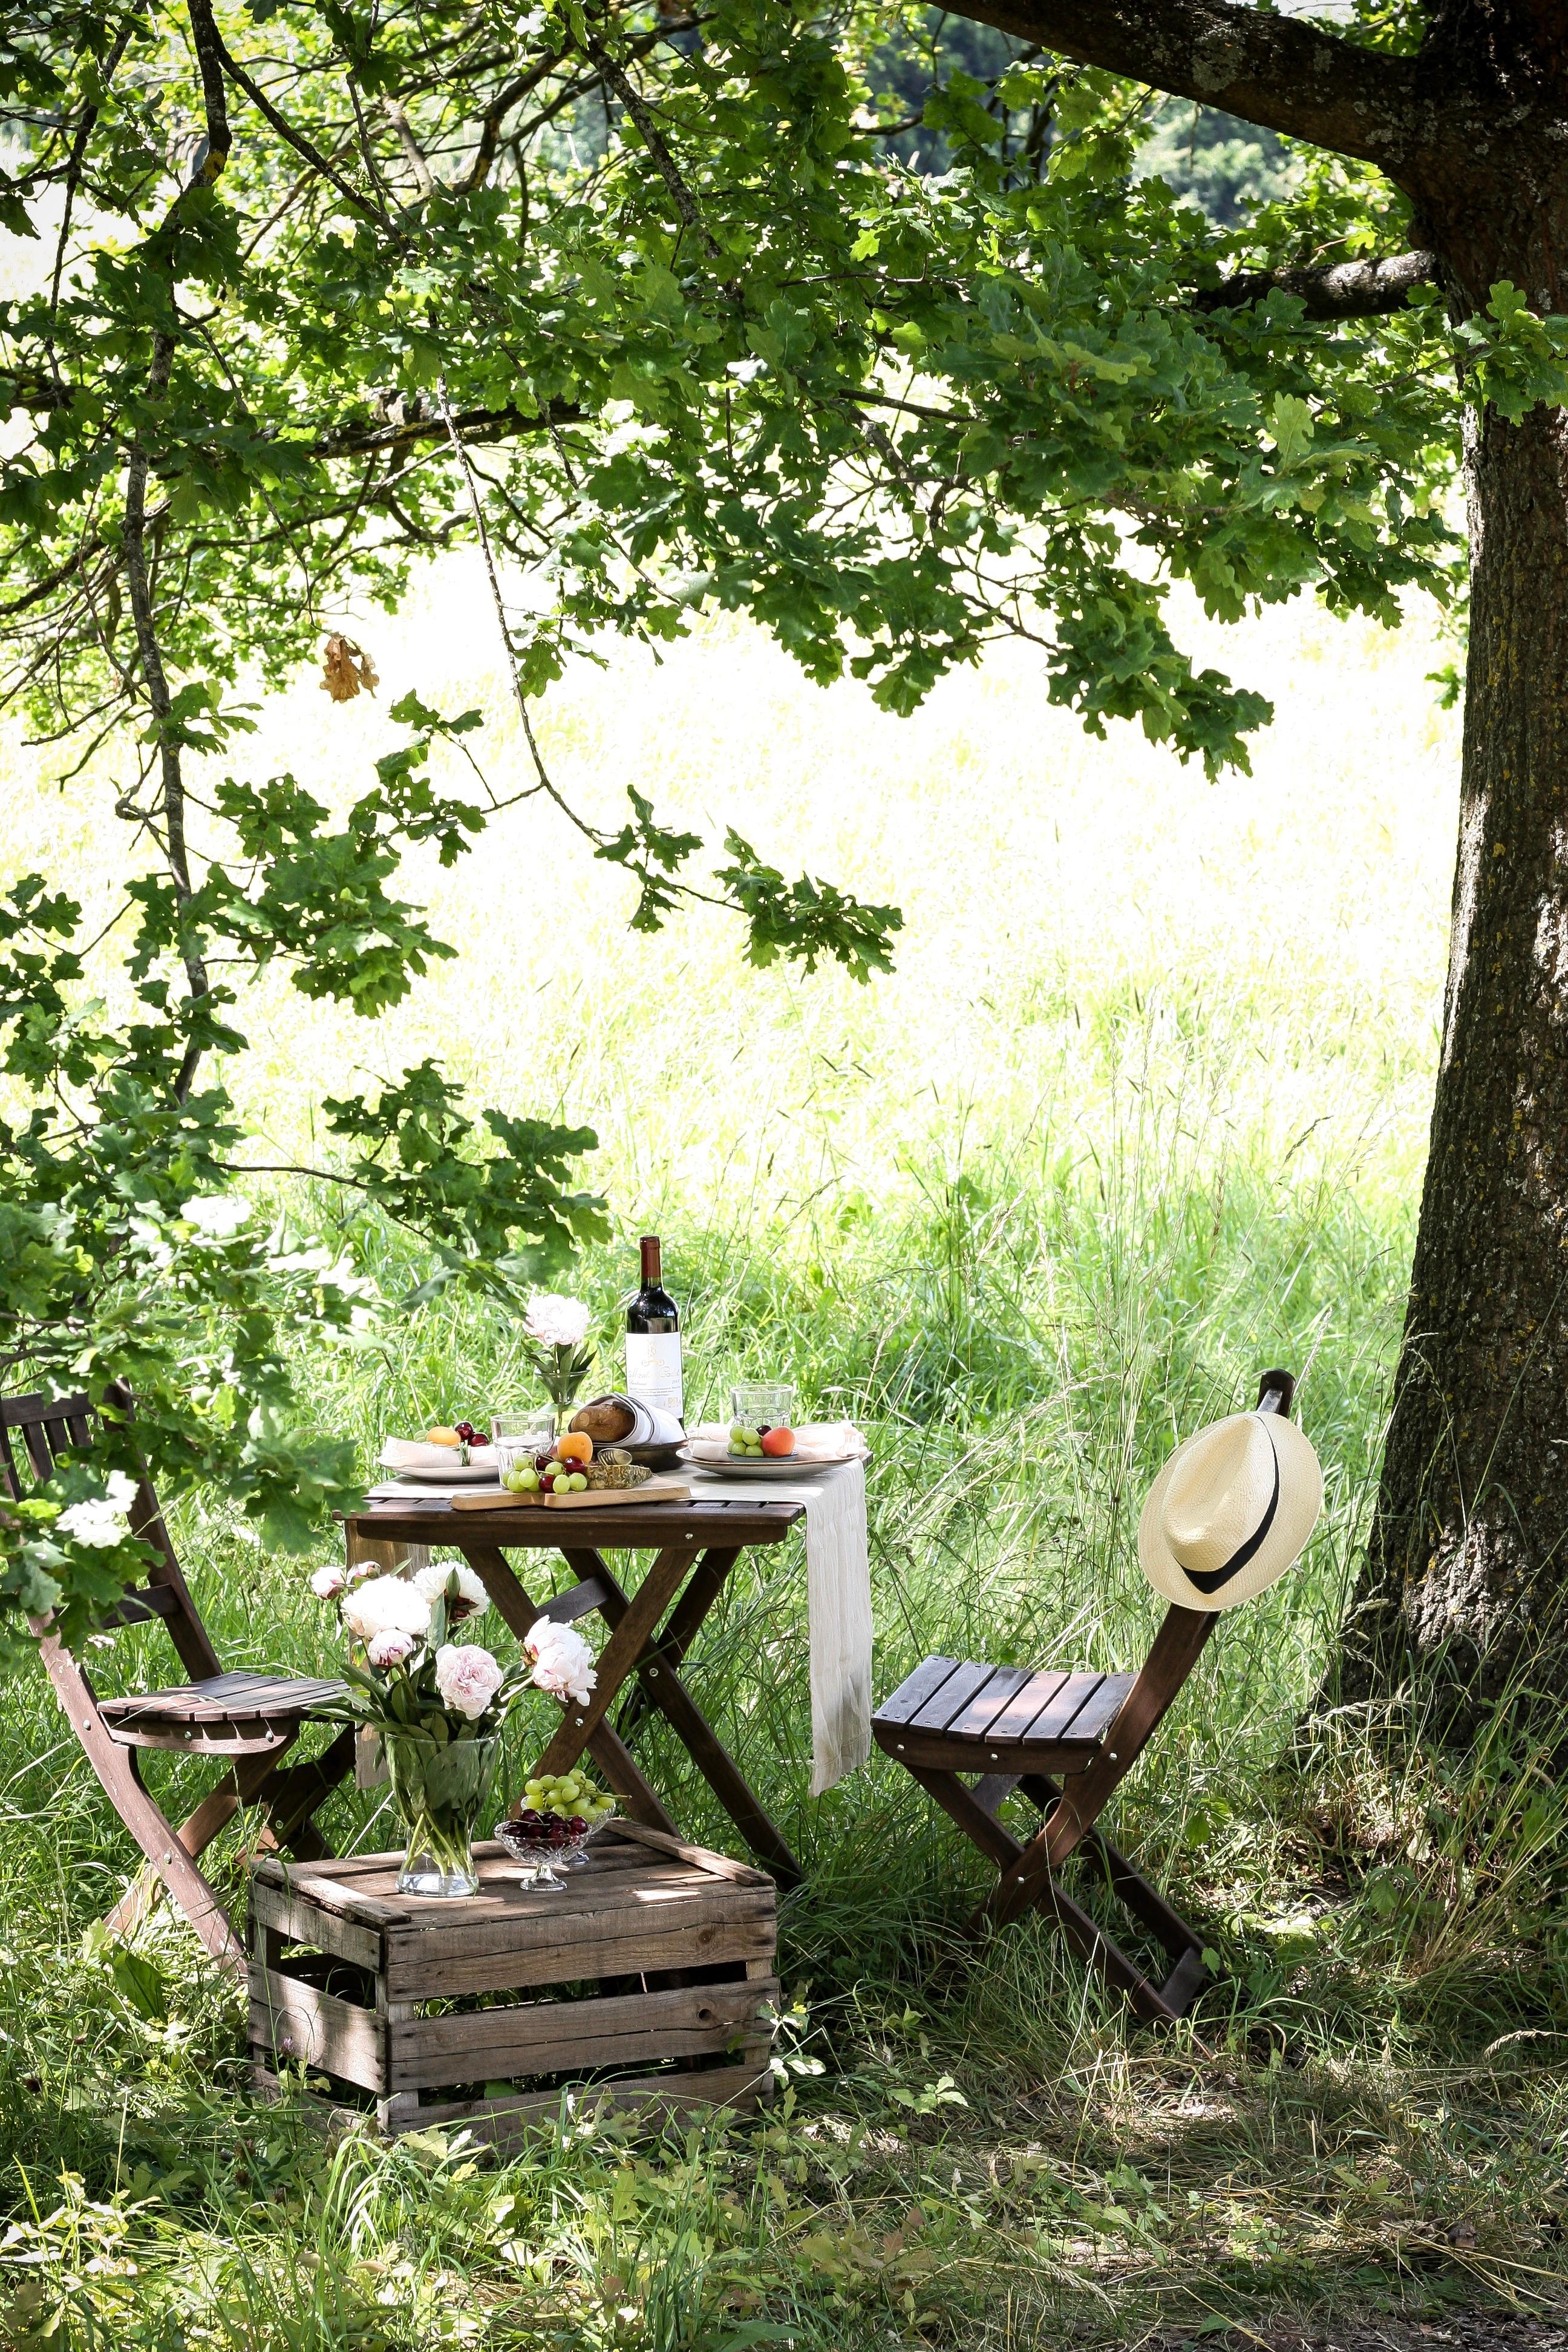 La dolce vita #picknick #summertime #summervibes #countrystyle #landleben